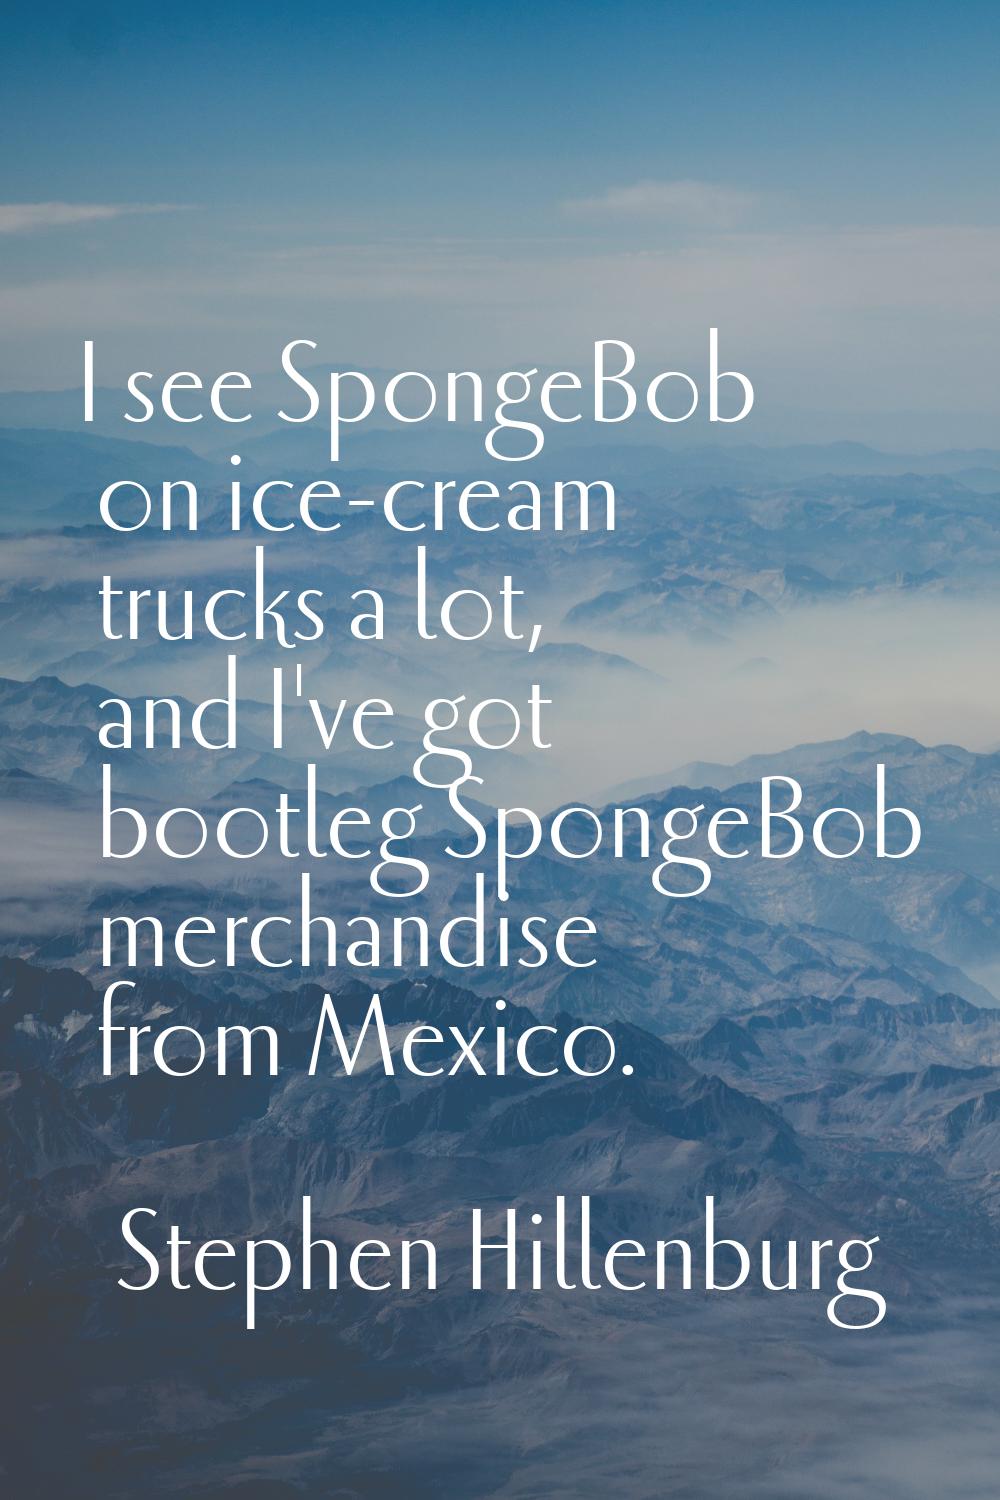 I see SpongeBob on ice-cream trucks a lot, and I've got bootleg SpongeBob merchandise from Mexico.